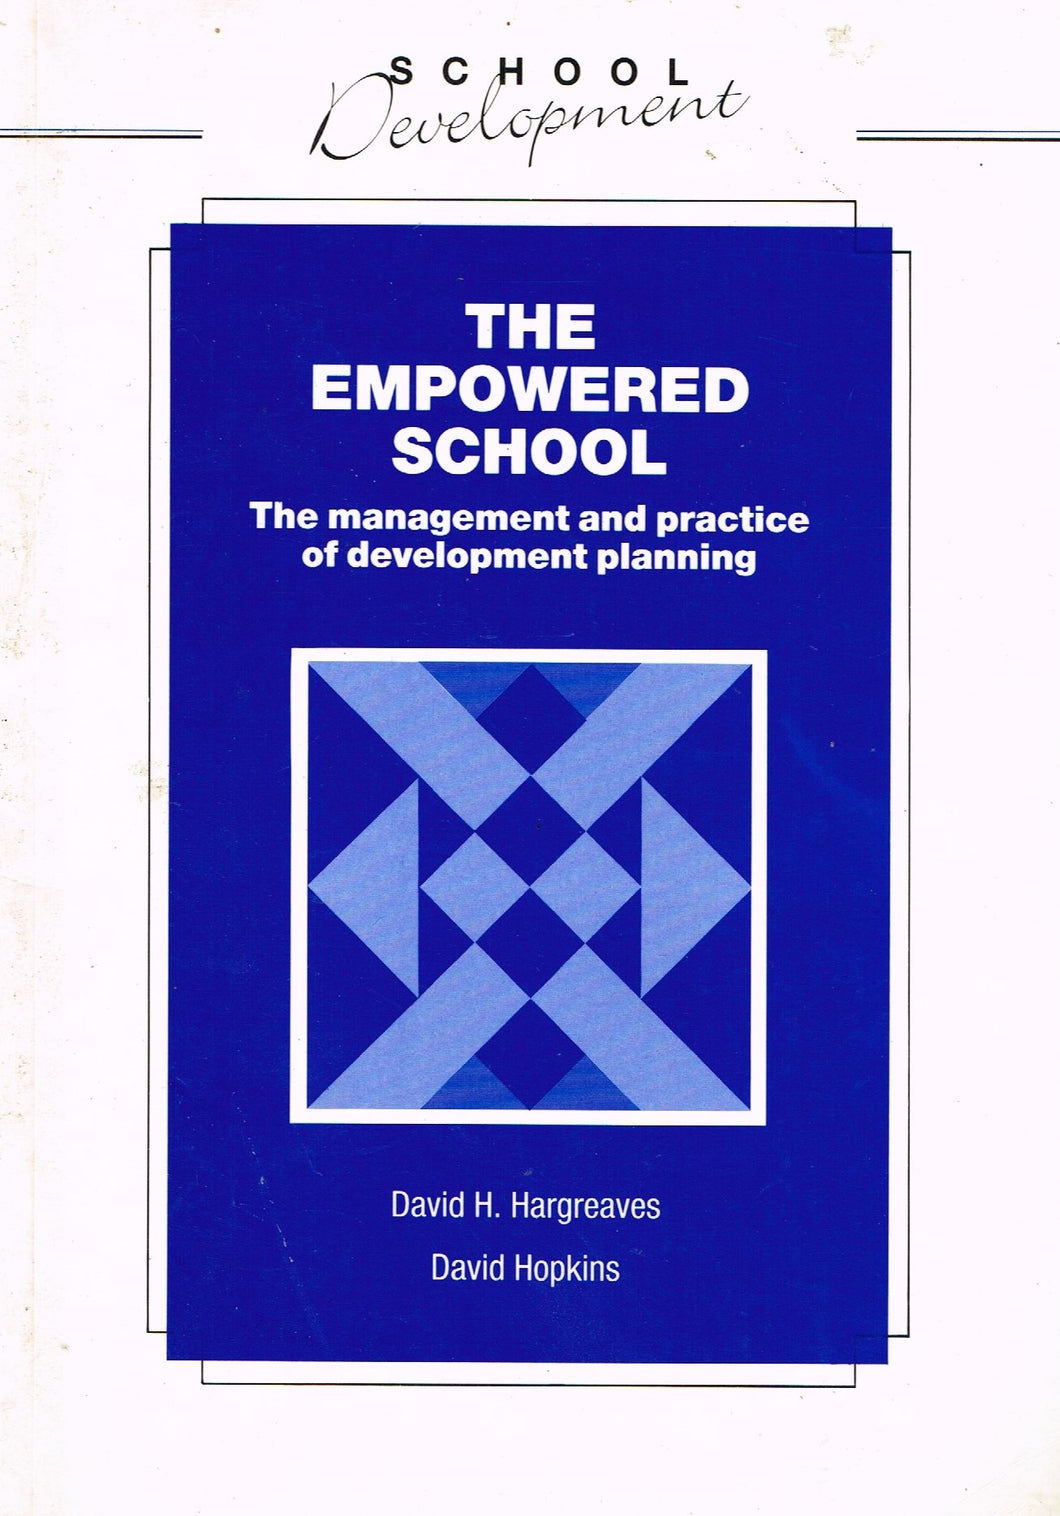 The Empowered School: Management and Practice of Development Planning (School Development)